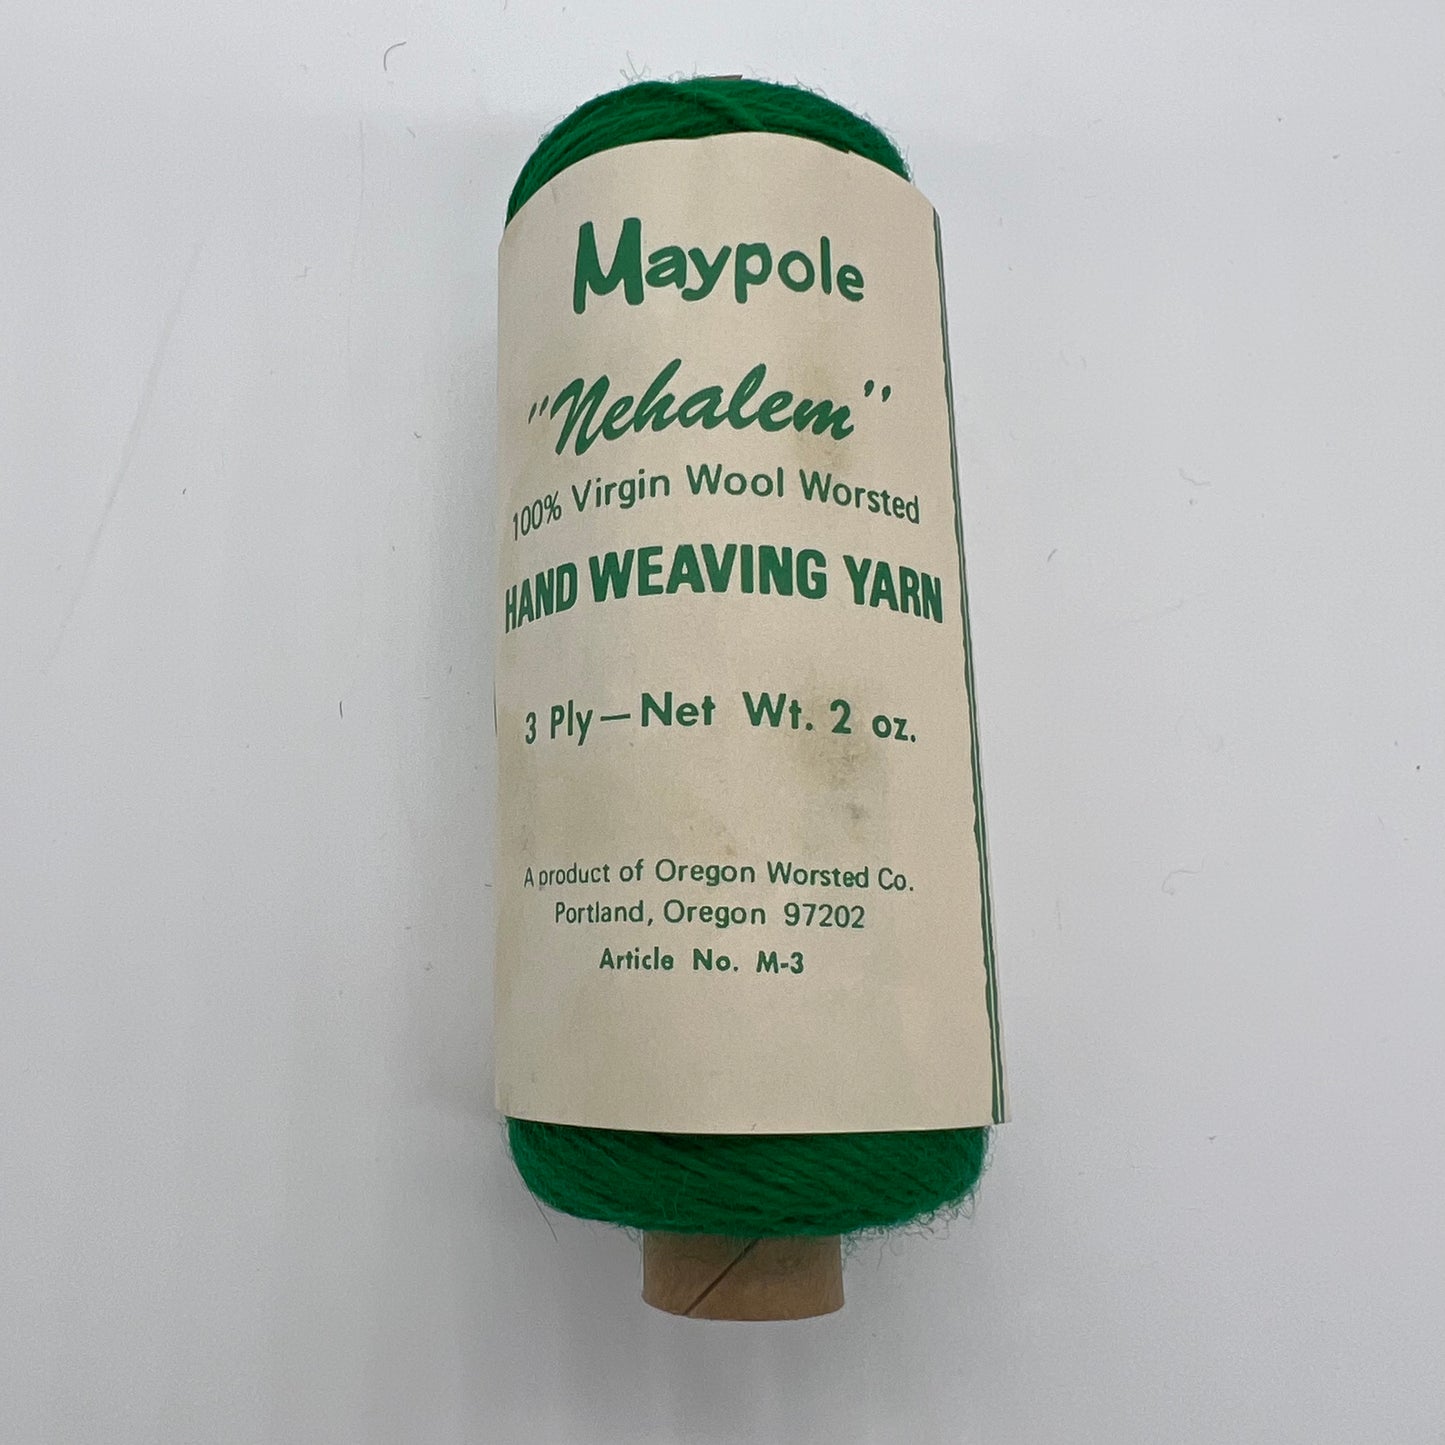 Maypole Nehalem Bright Green Yarn